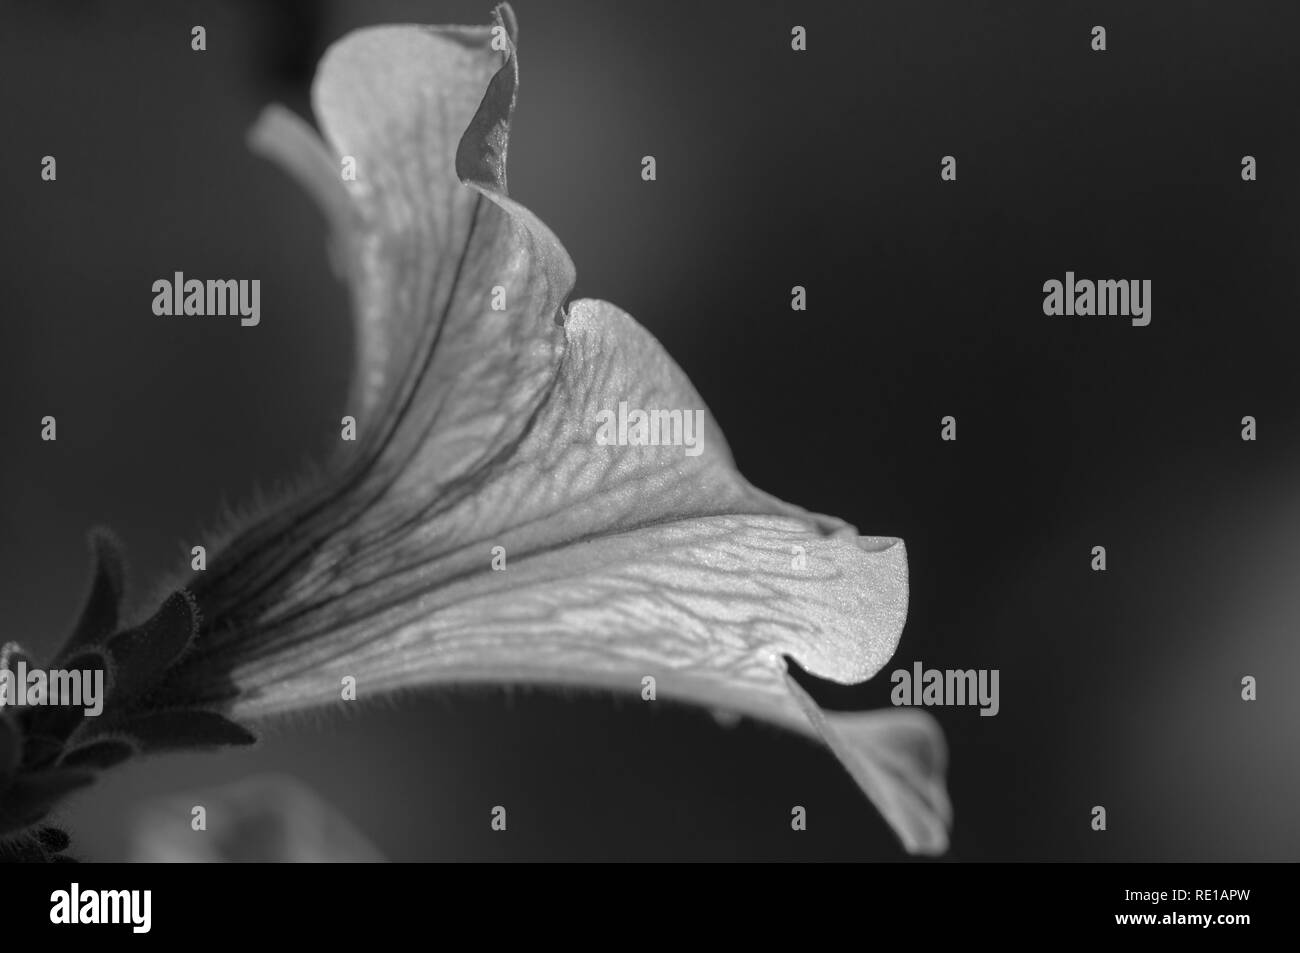 Beautiful petunia Black and White Stock Photos & Images - Alamy